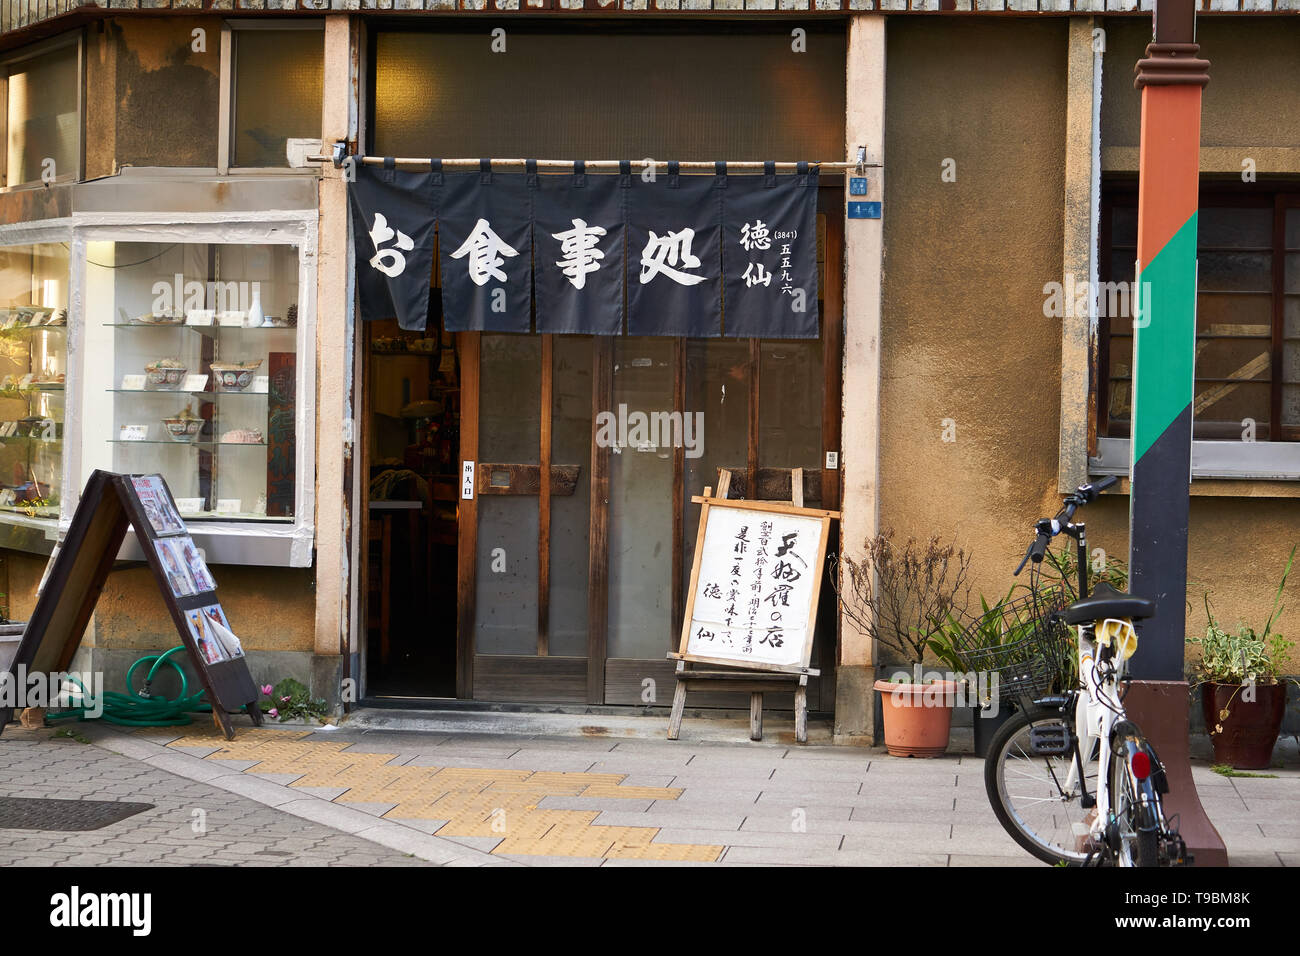 A tempura restaurant named Tokusen (徳仙) on a corner in Rokku Dori Street in Asakusa, Tokyo. Sample food in the window and noren curtain over the door. Stock Photo